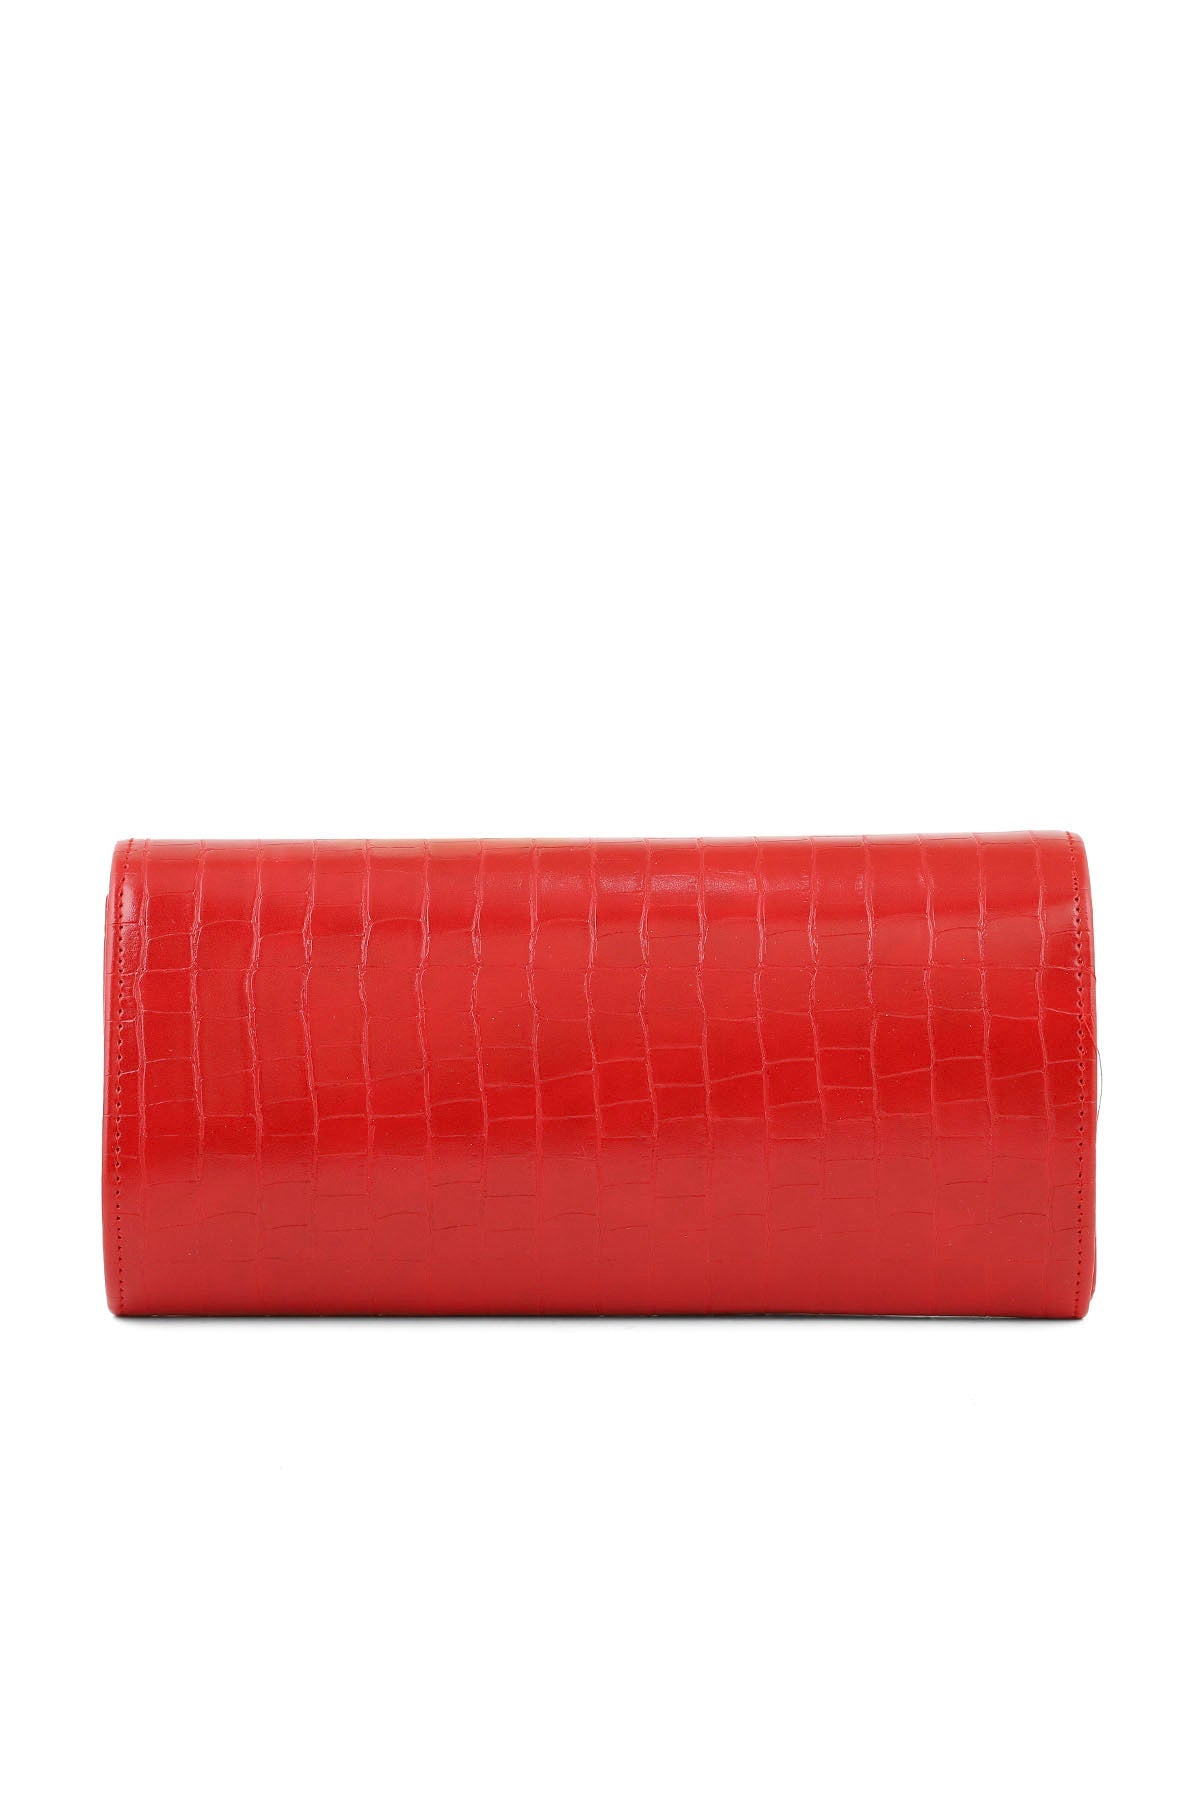 Flap Shoulder Bags B21581-Red